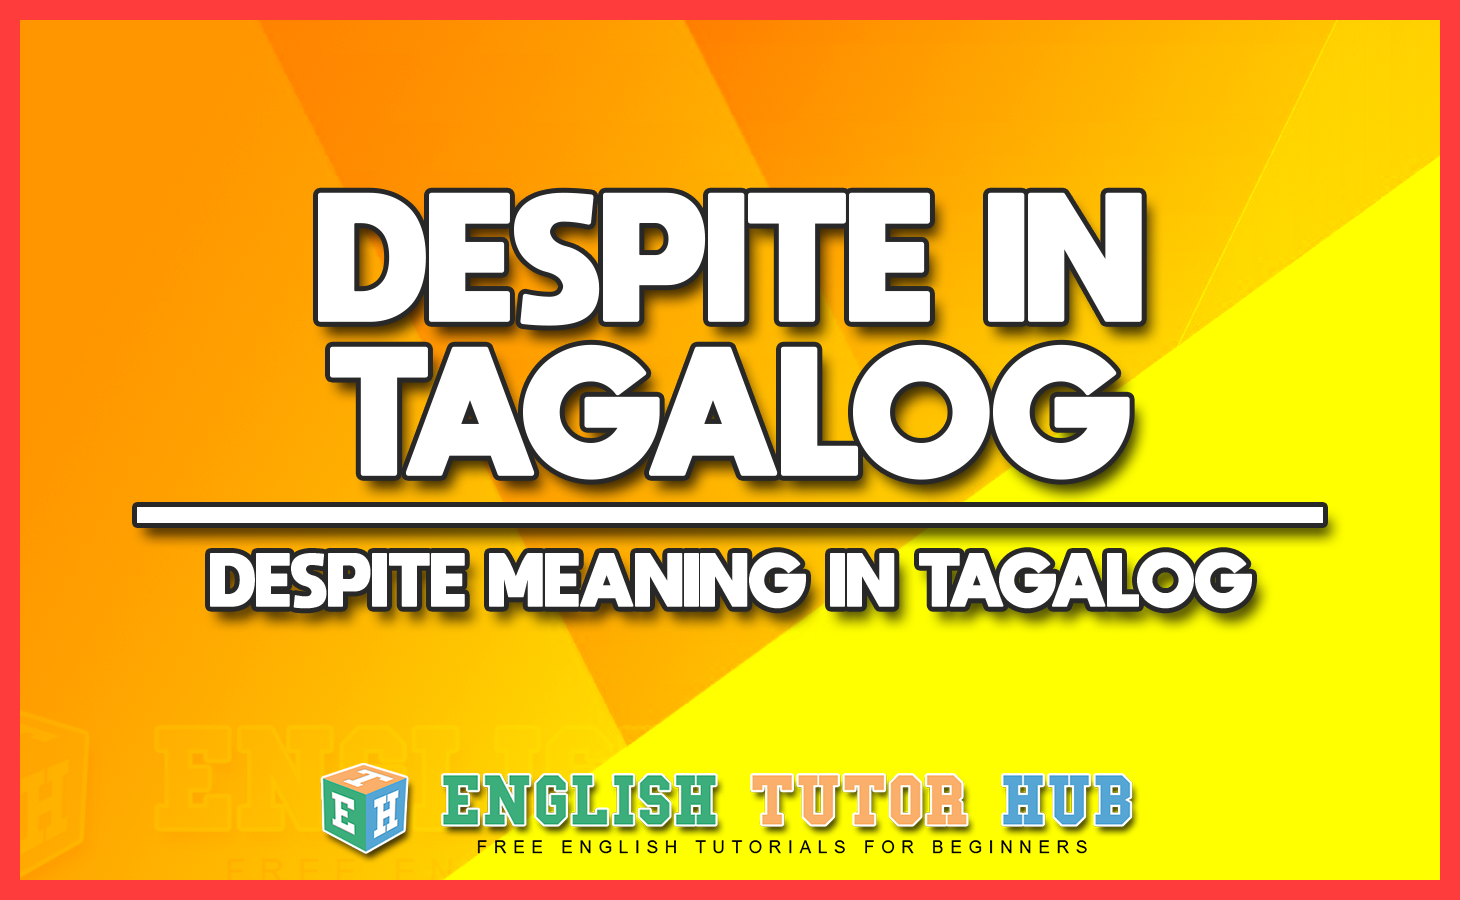 DESPITE IN TAGALOG - DESPITE MEANING IN TAGALOG